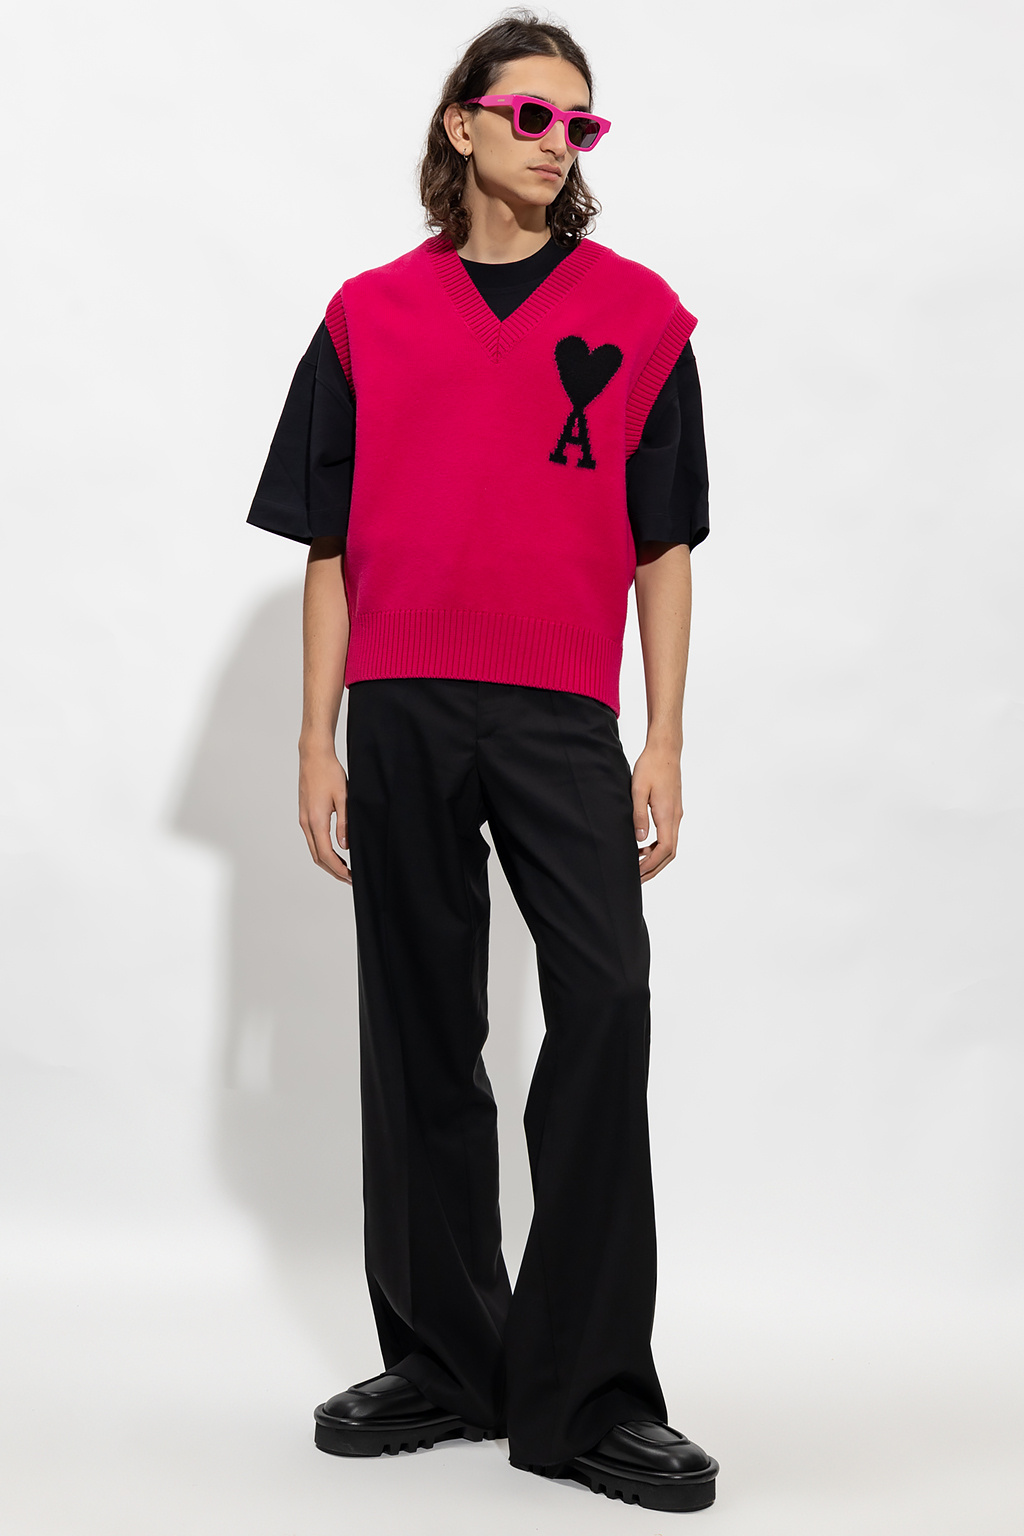 Ami Alexandre Mattiussi T-shirt Nike NK Dry Park 20 vermelho branco infantil